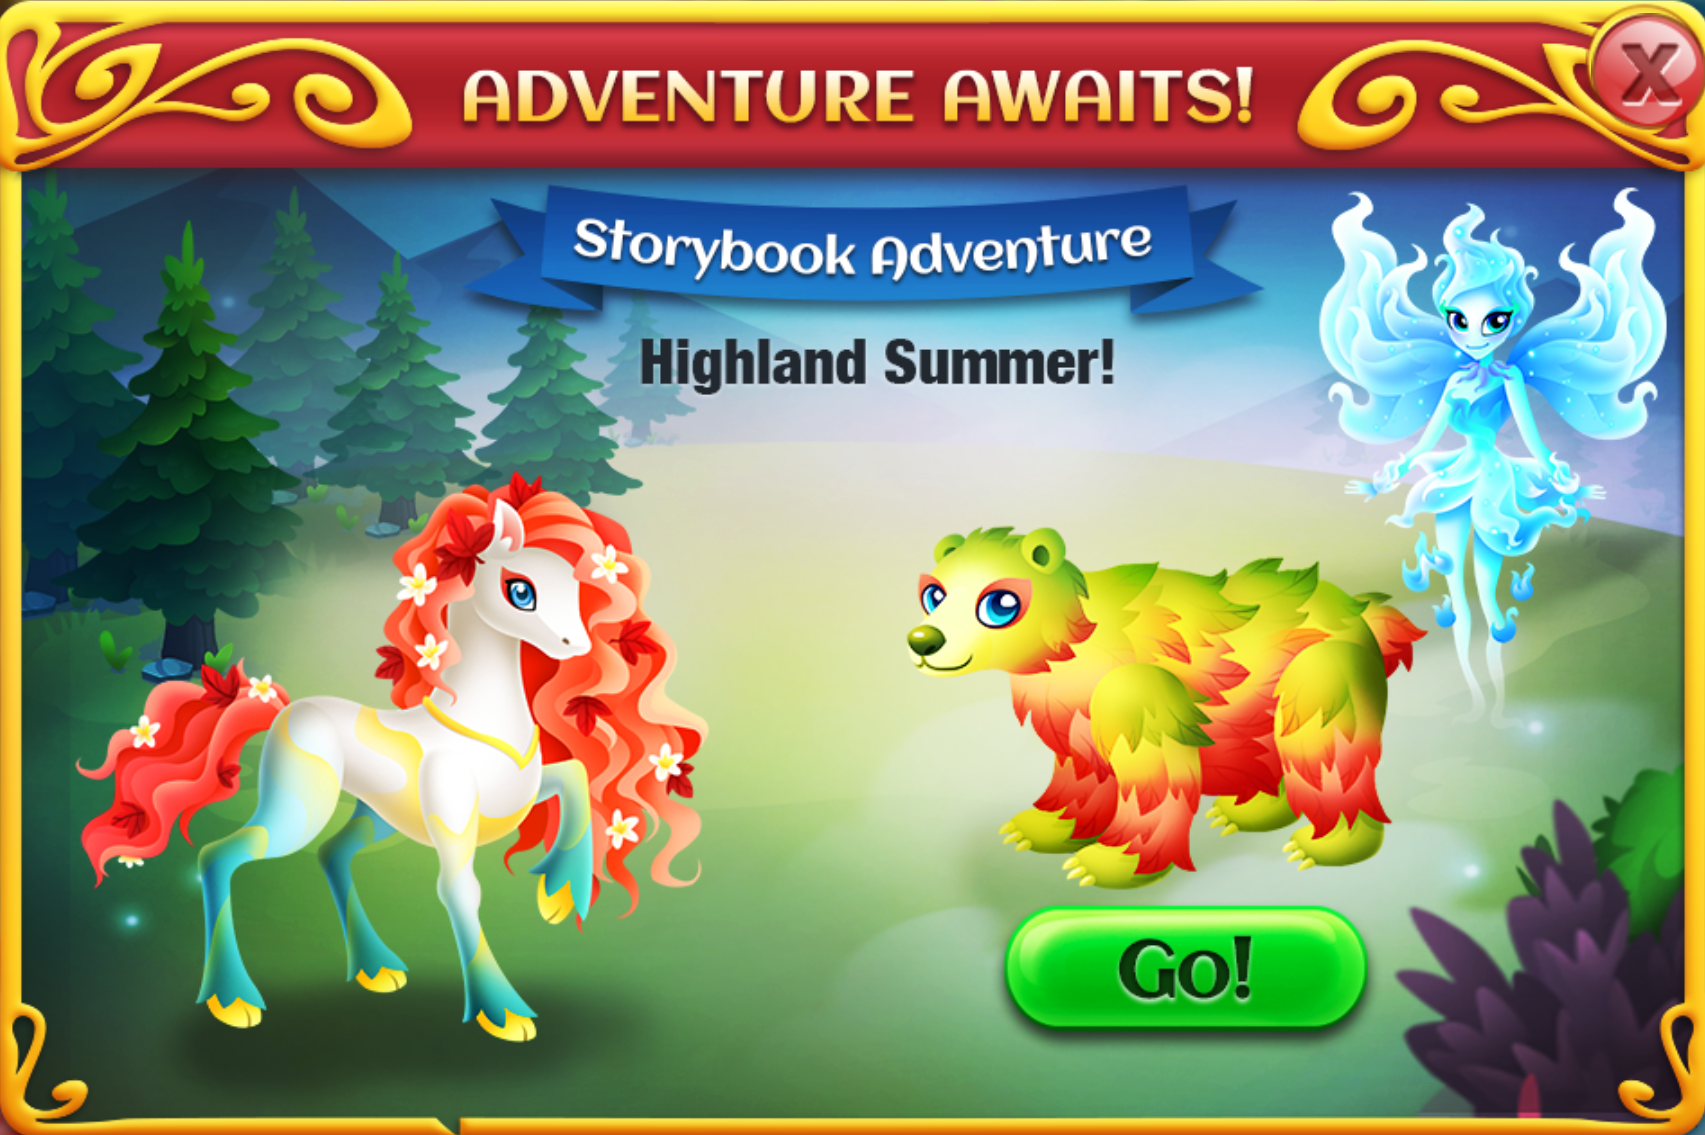 fantasy forest story storybook jingle bells